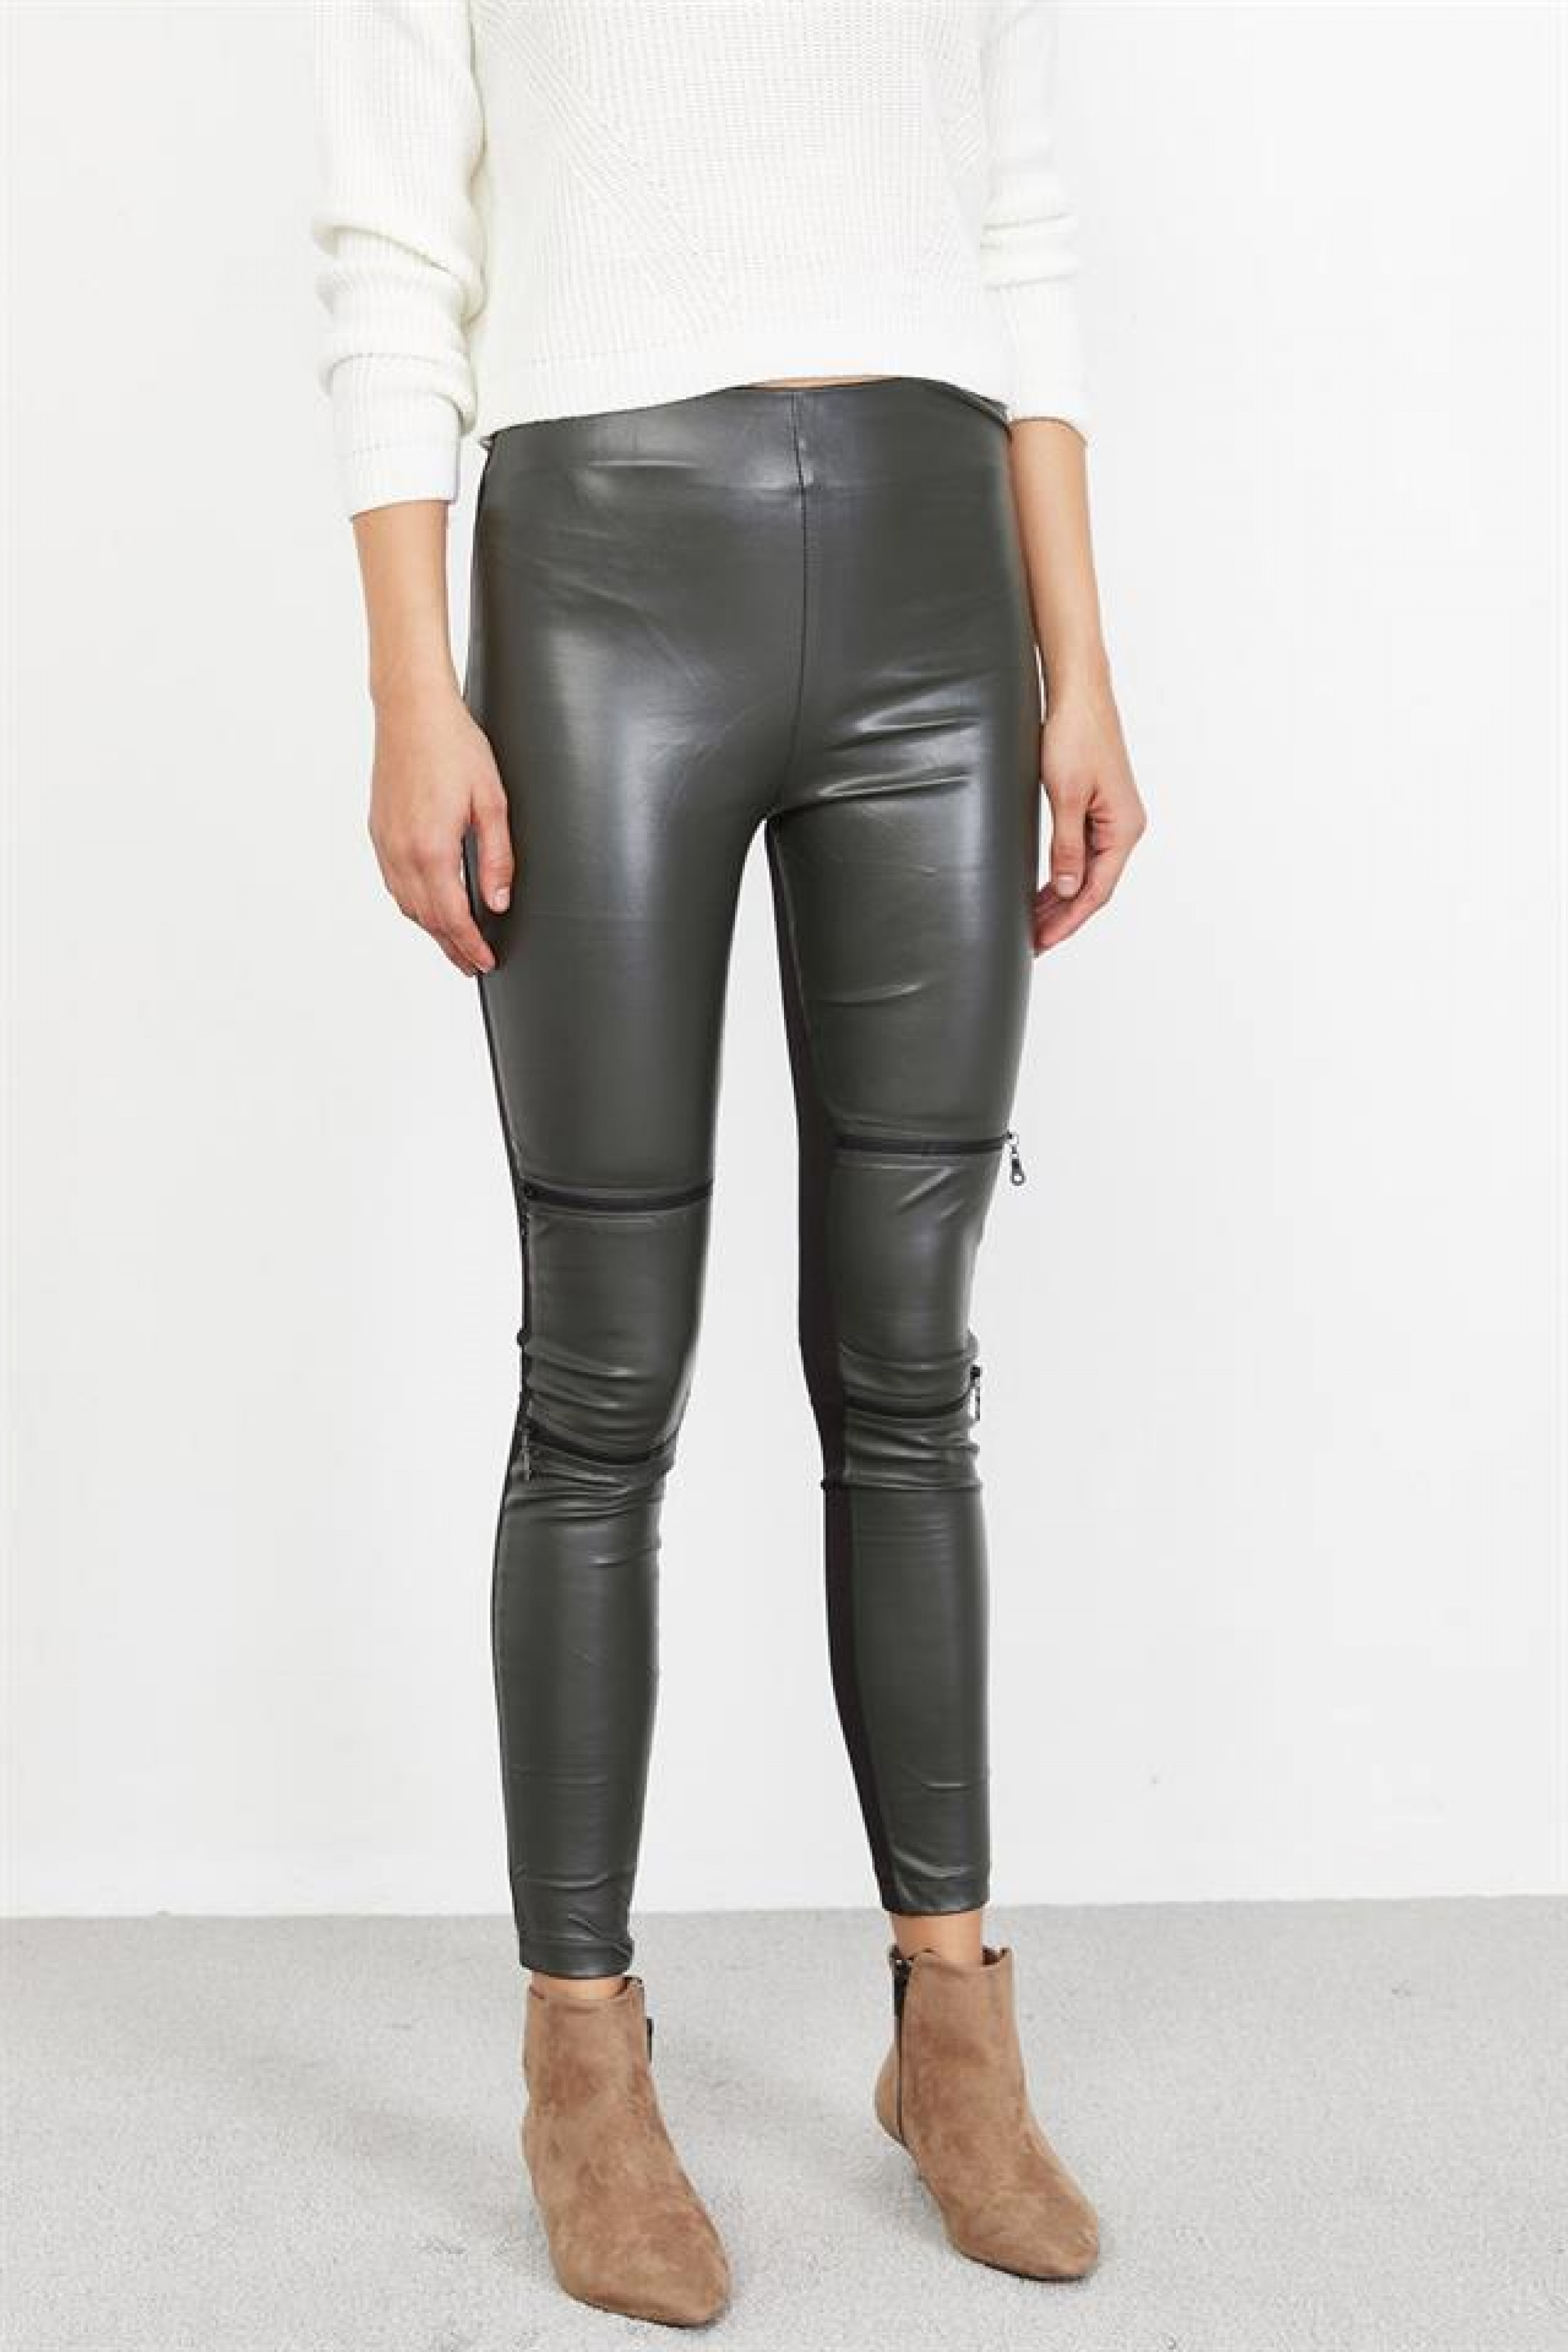 H&M Leather Leggings Pants